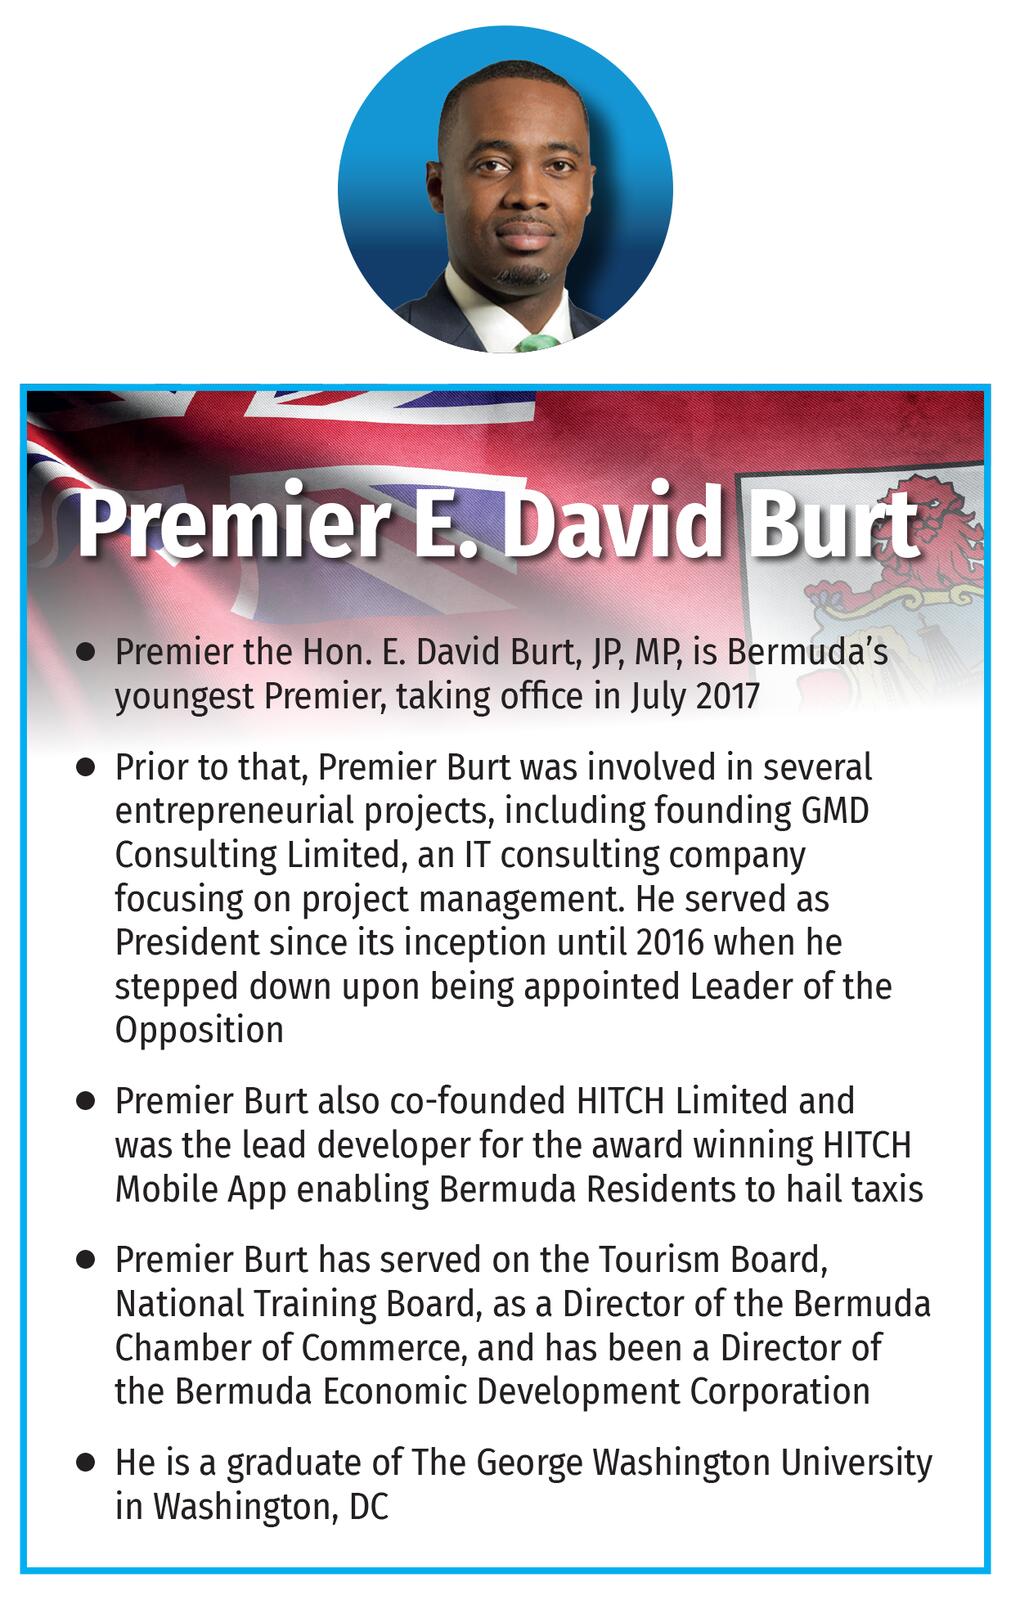 Premier E. David Burt